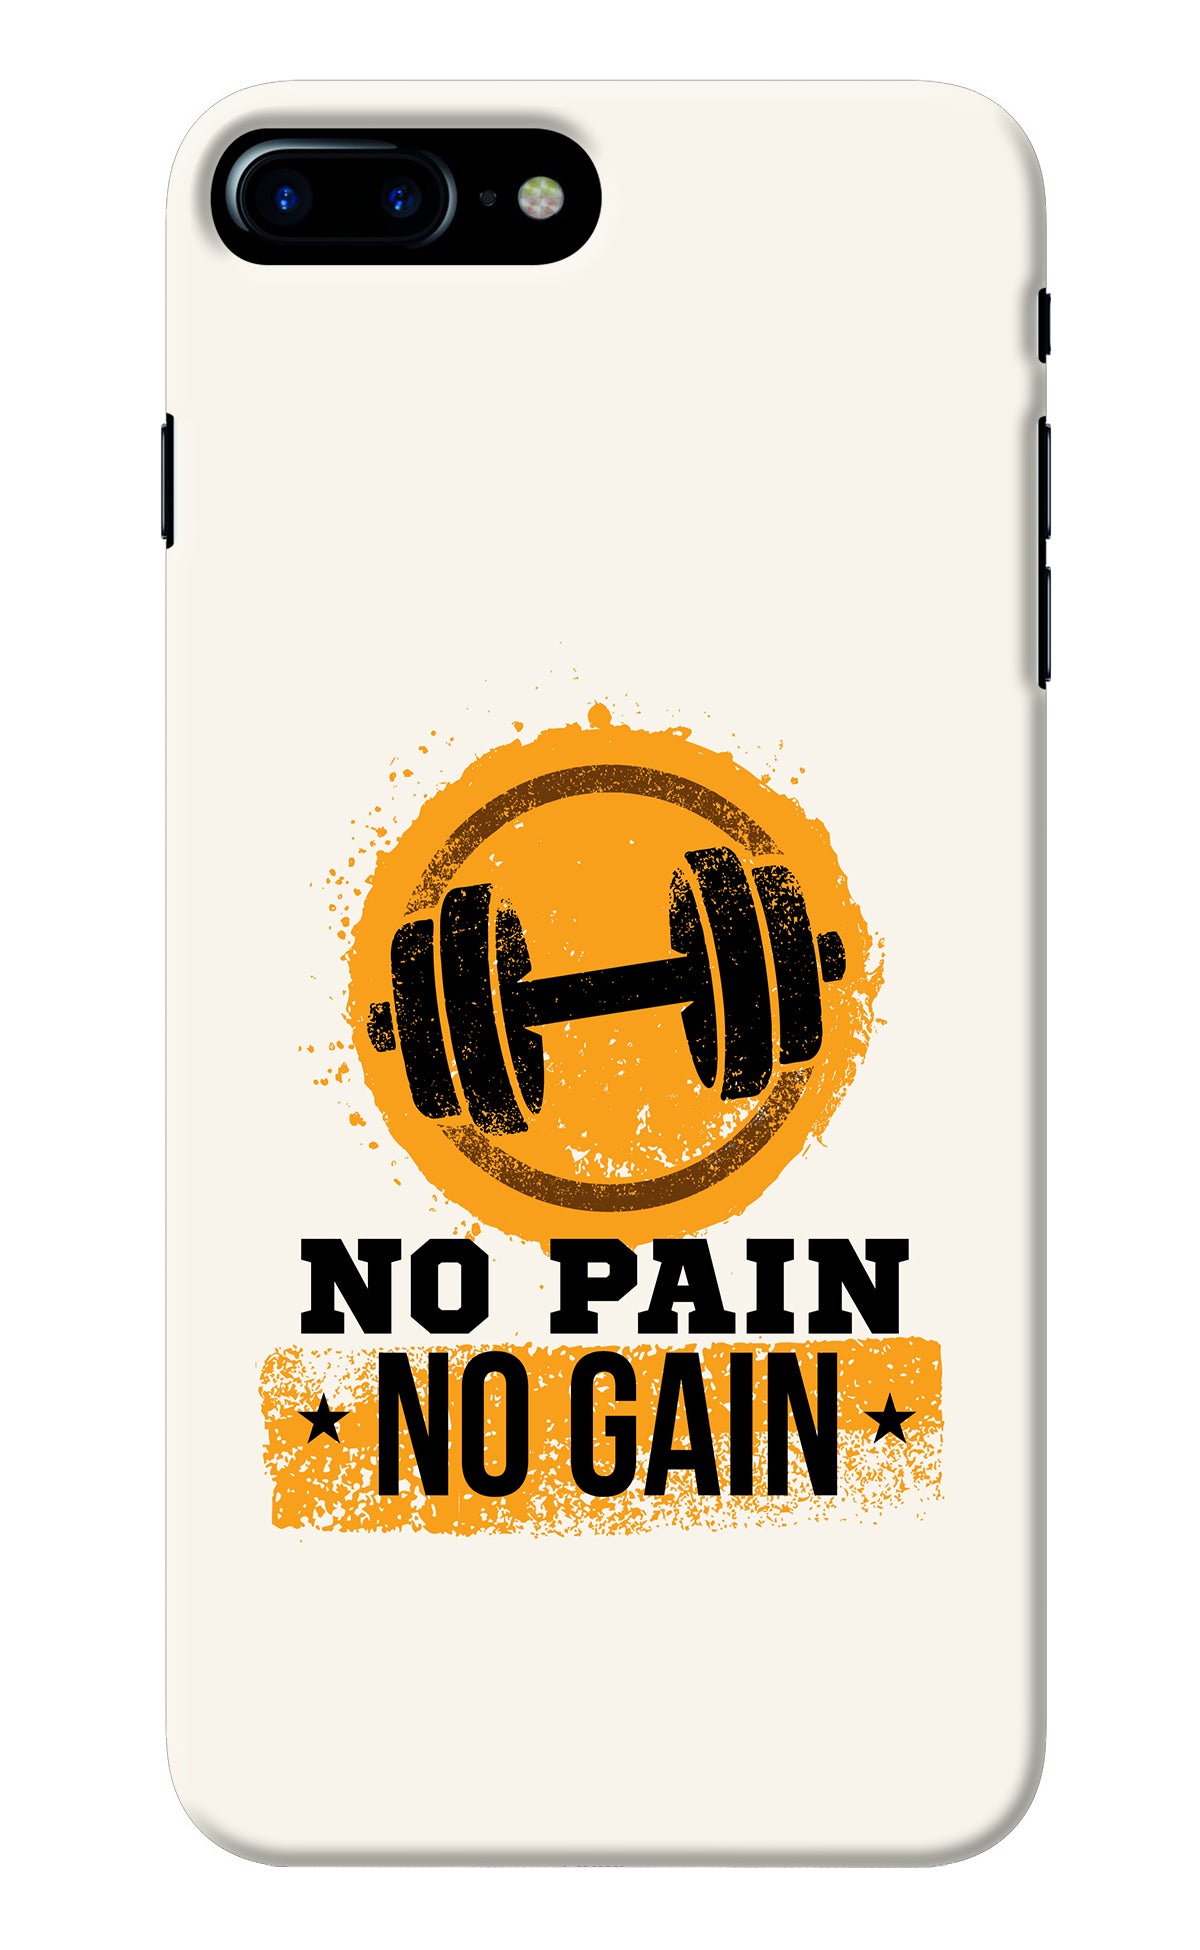 No Pain No Gain iPhone 8 Plus Back Cover